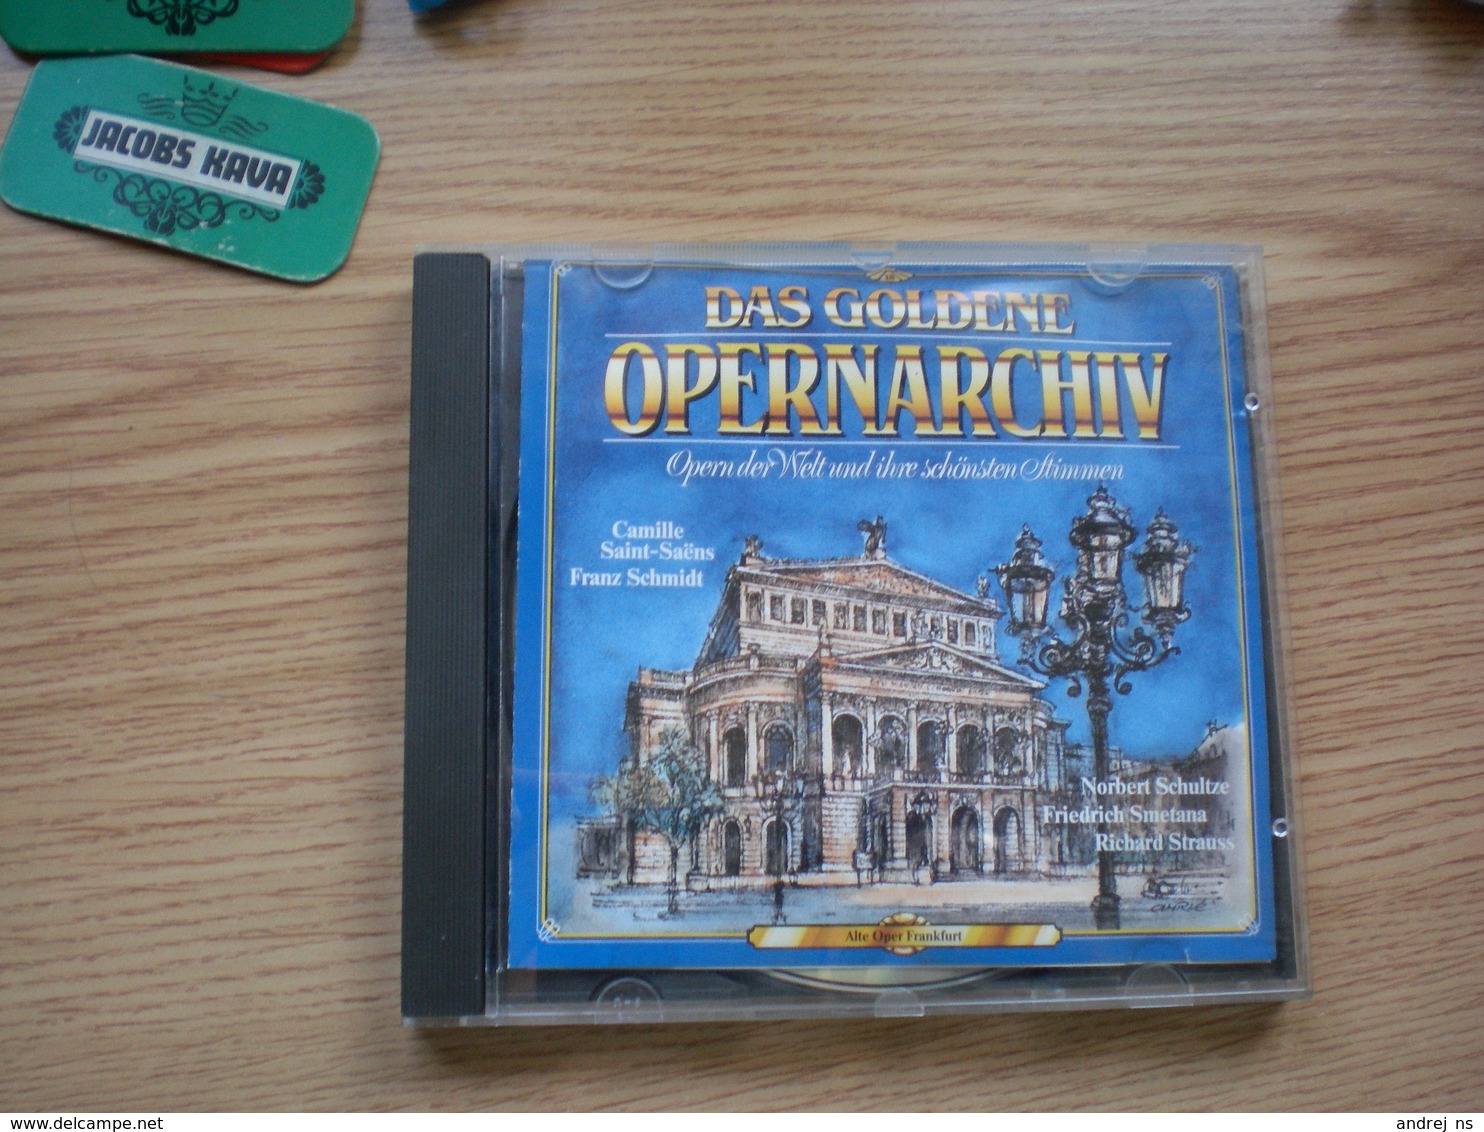 Das Goldene Opernarchiv - Opera / Operette